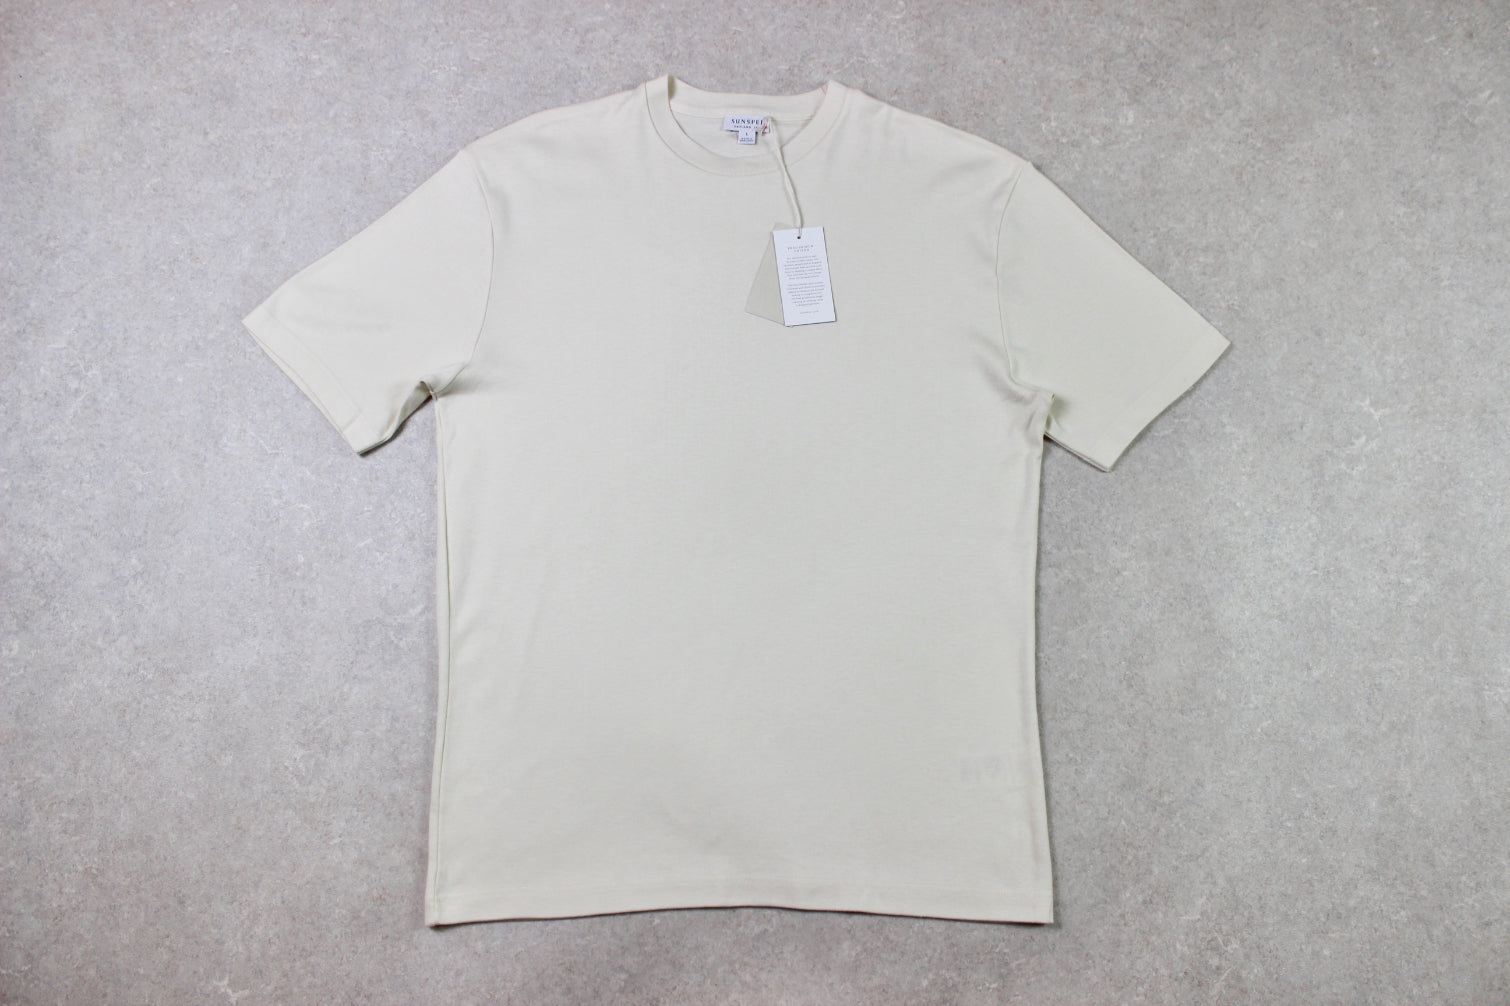 Sunspel - T Shirt - Cream - Large - Brand New